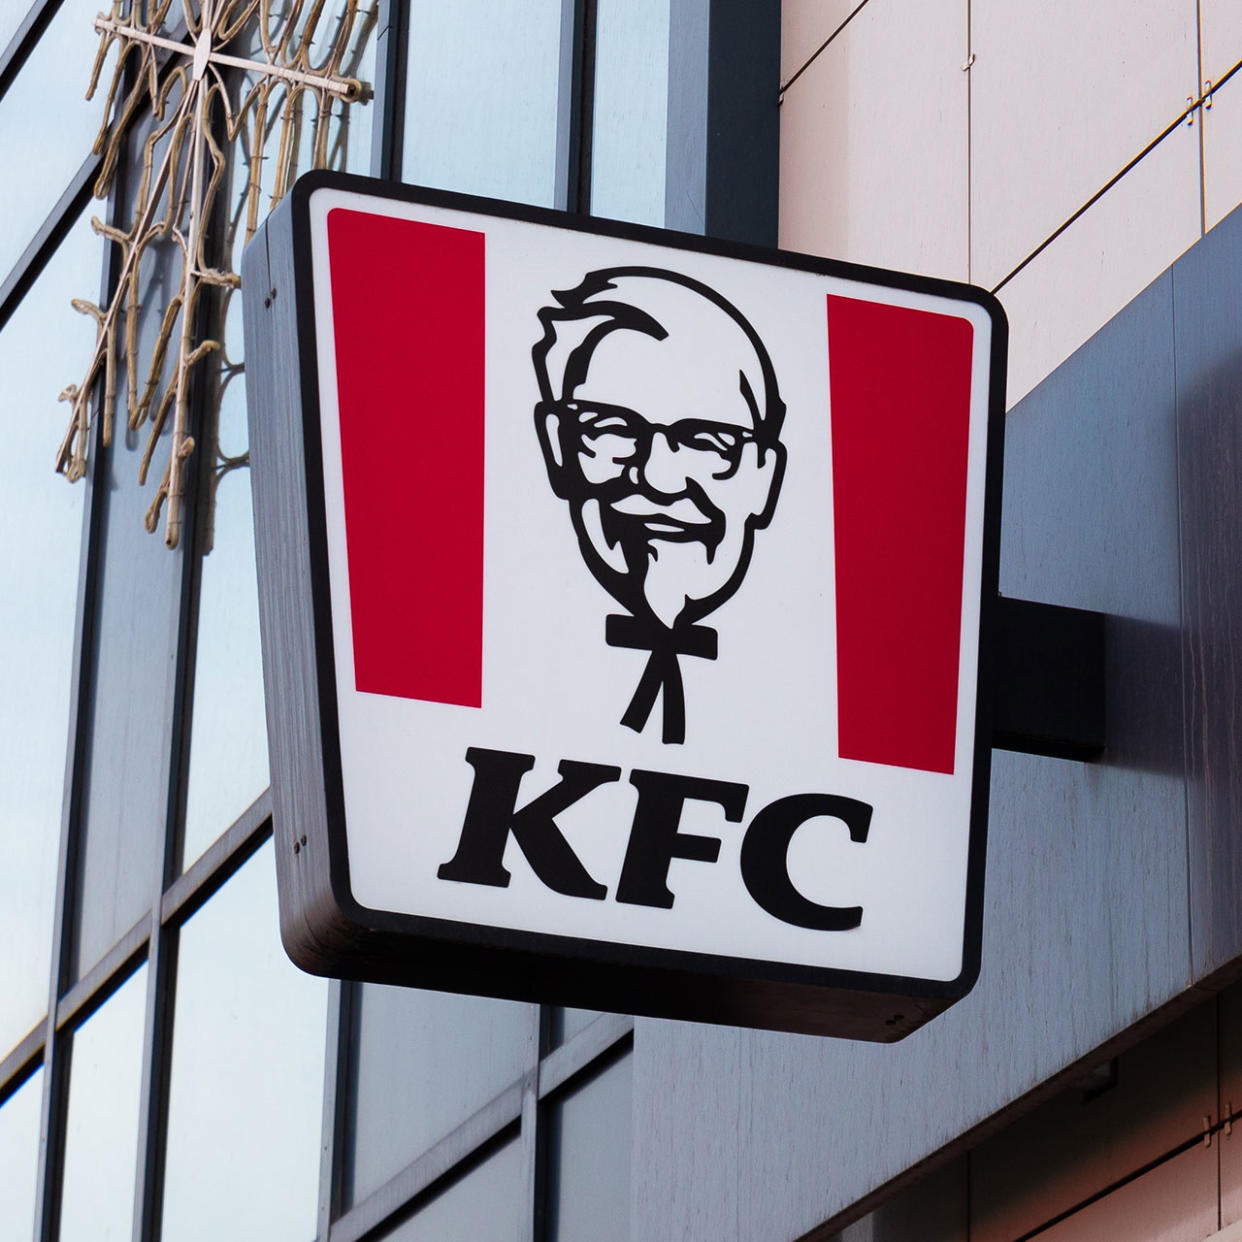 KFC logo on restaurant sign